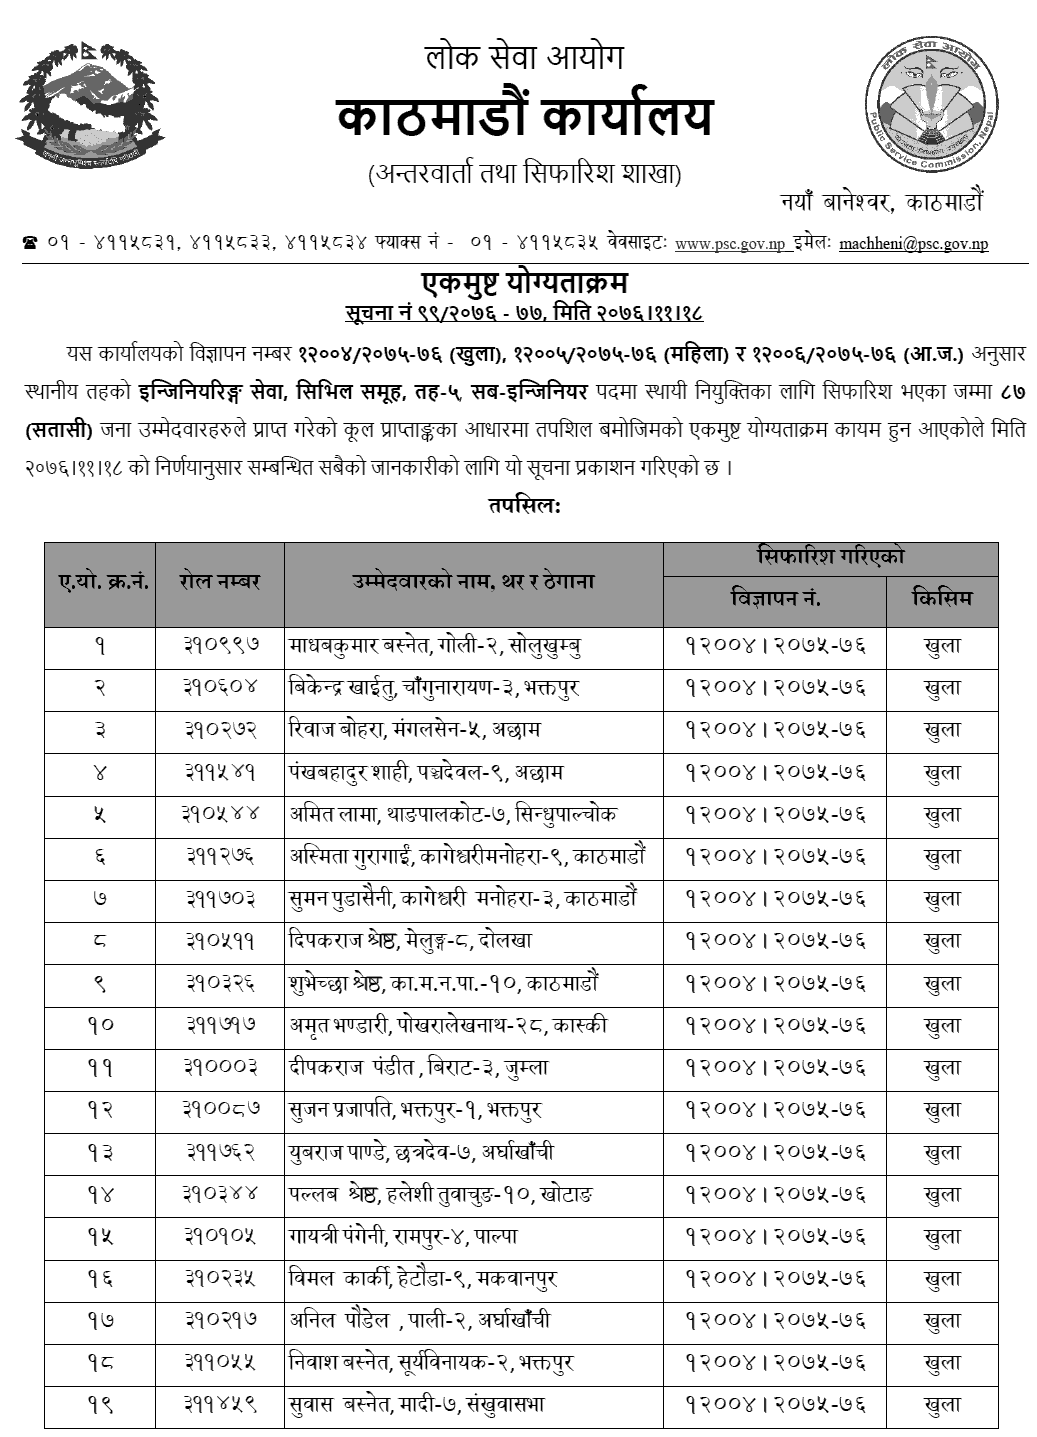 Lok Sewa Aayog Kathmandu Local Level 5th Sub Engineer Final Result and Sifaris